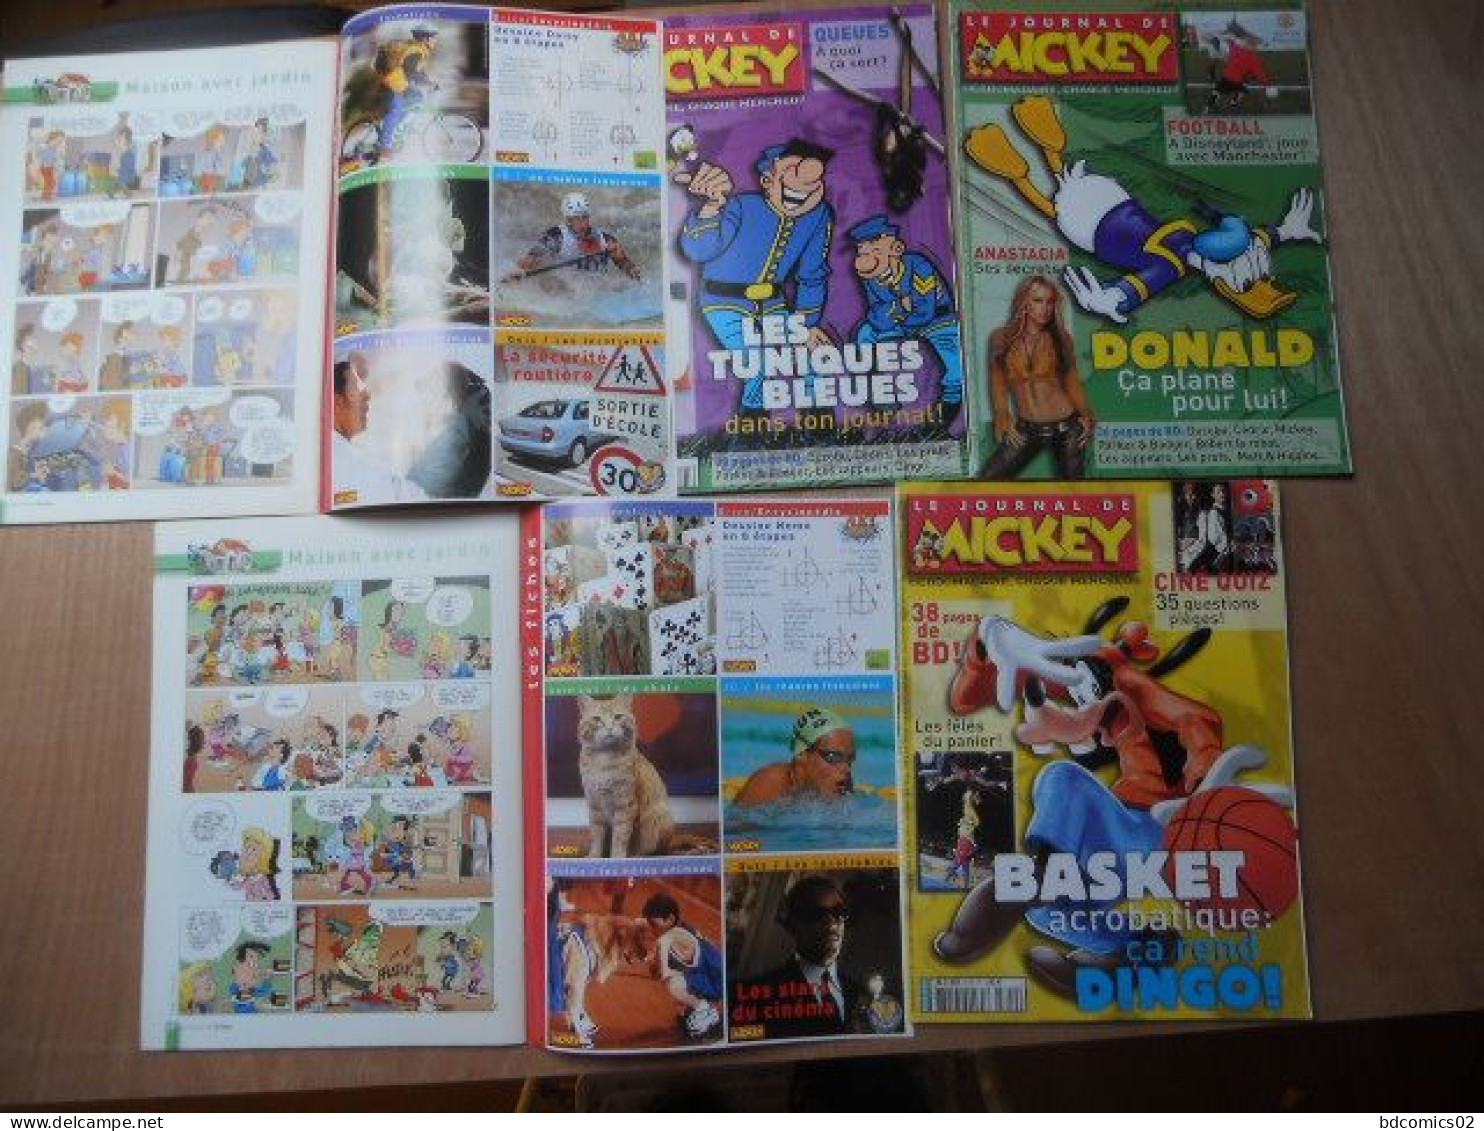 Le Journal De Mickey LOT DE 5 BD DU N° 2709 2707 2706  2705 2704 LOT N°5 - Wholesale, Bulk Lots